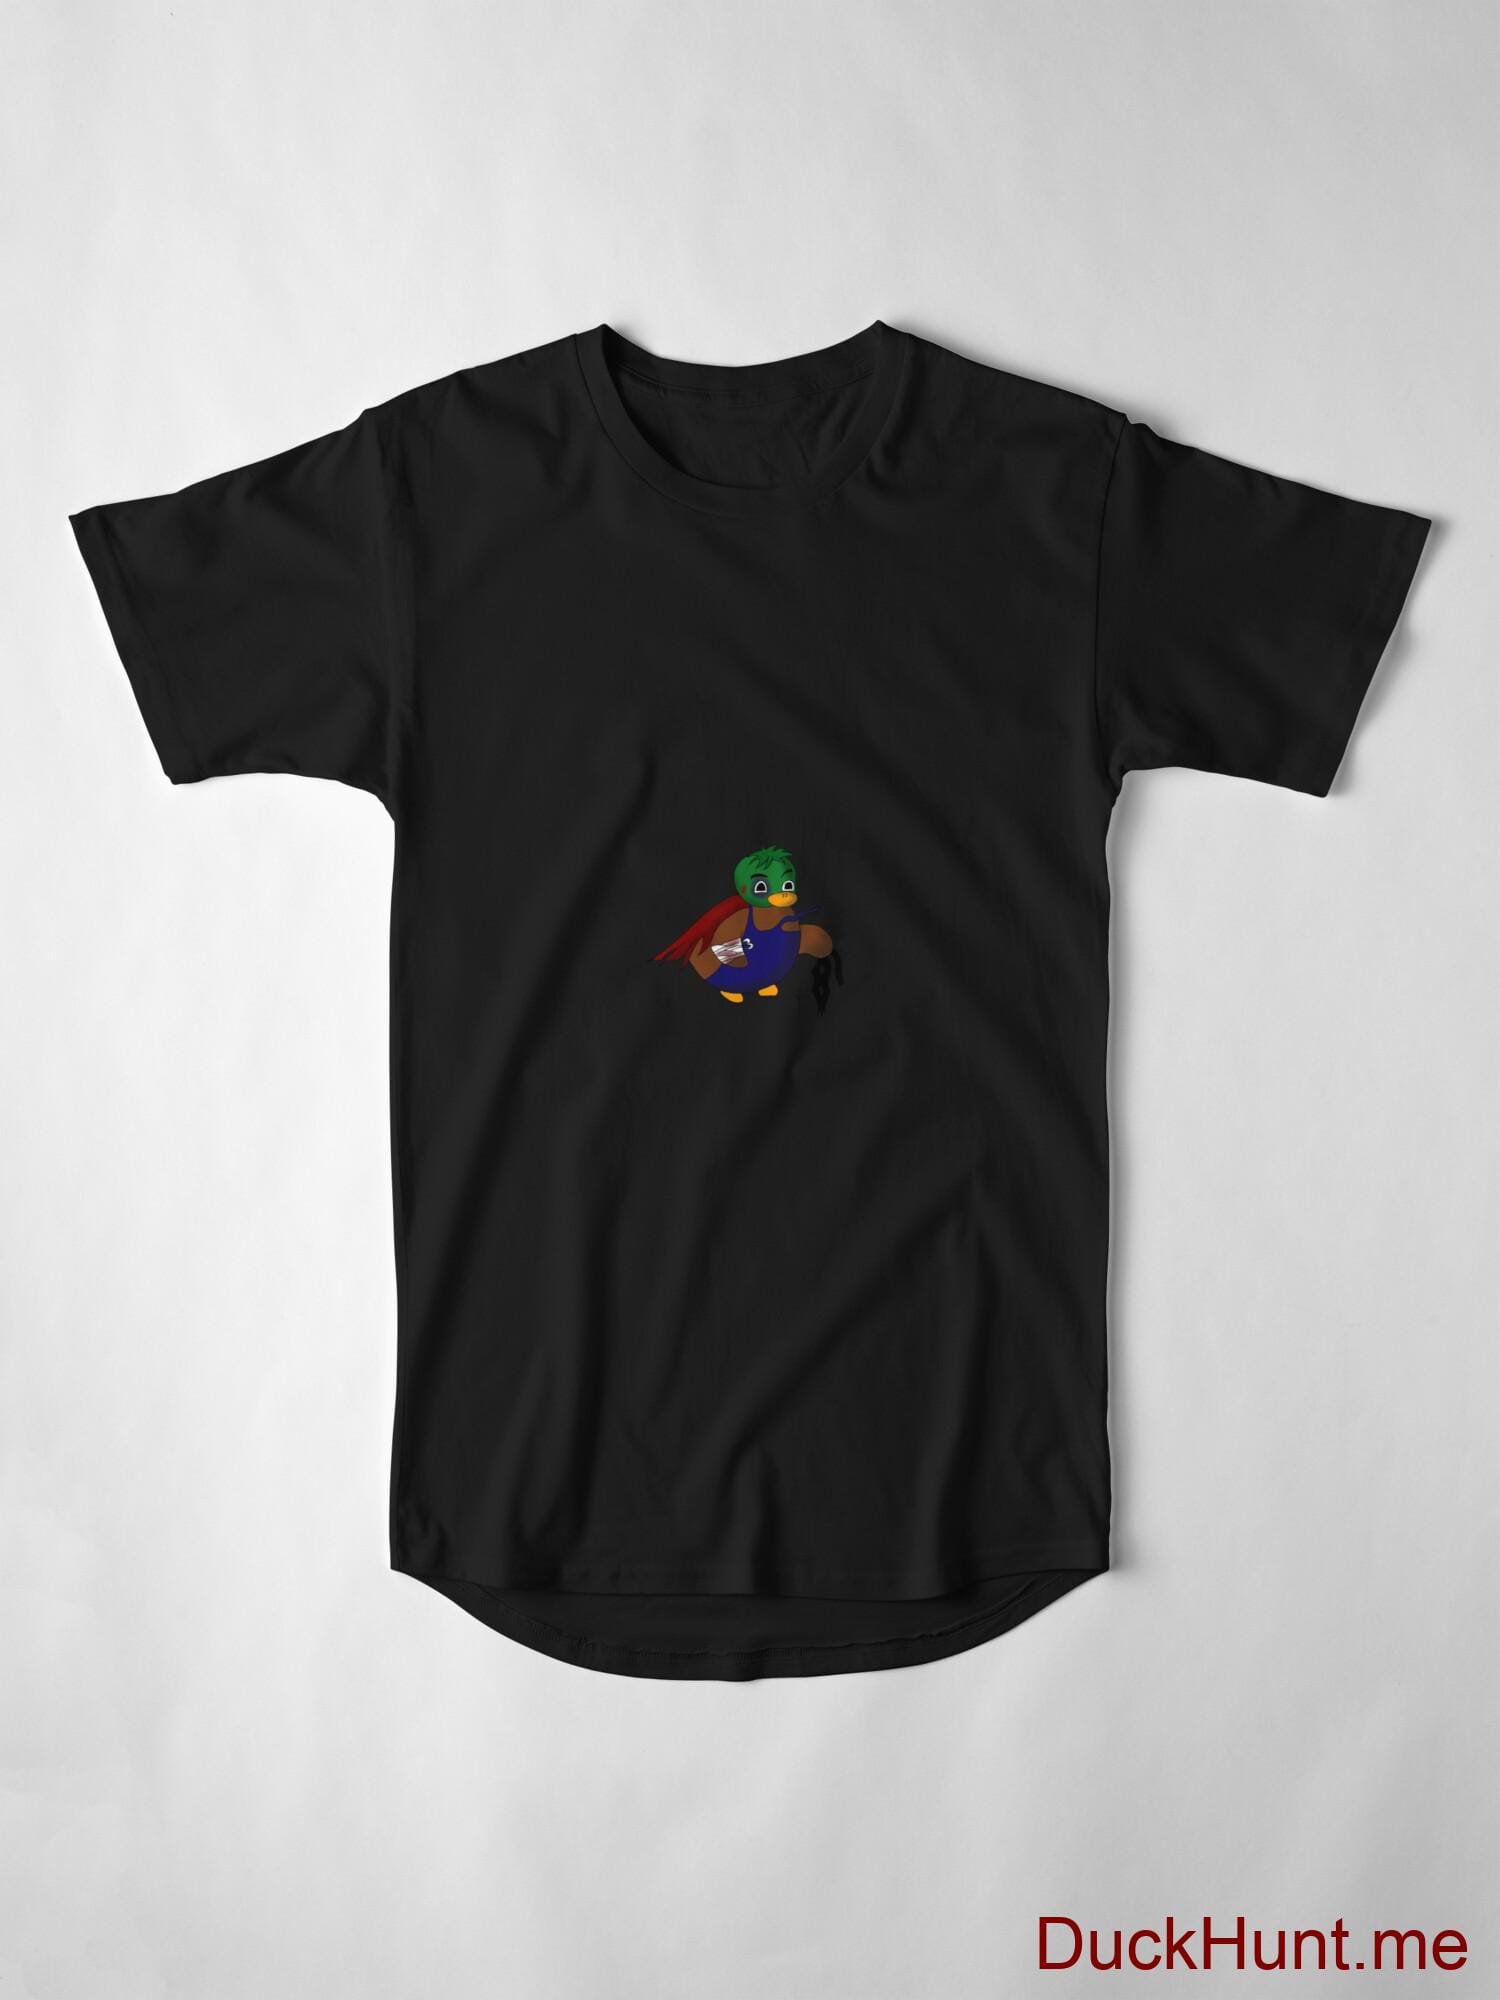 Dead DuckHunt Boss (smokeless) Black Long T-Shirt (Front printed) alternative image 3